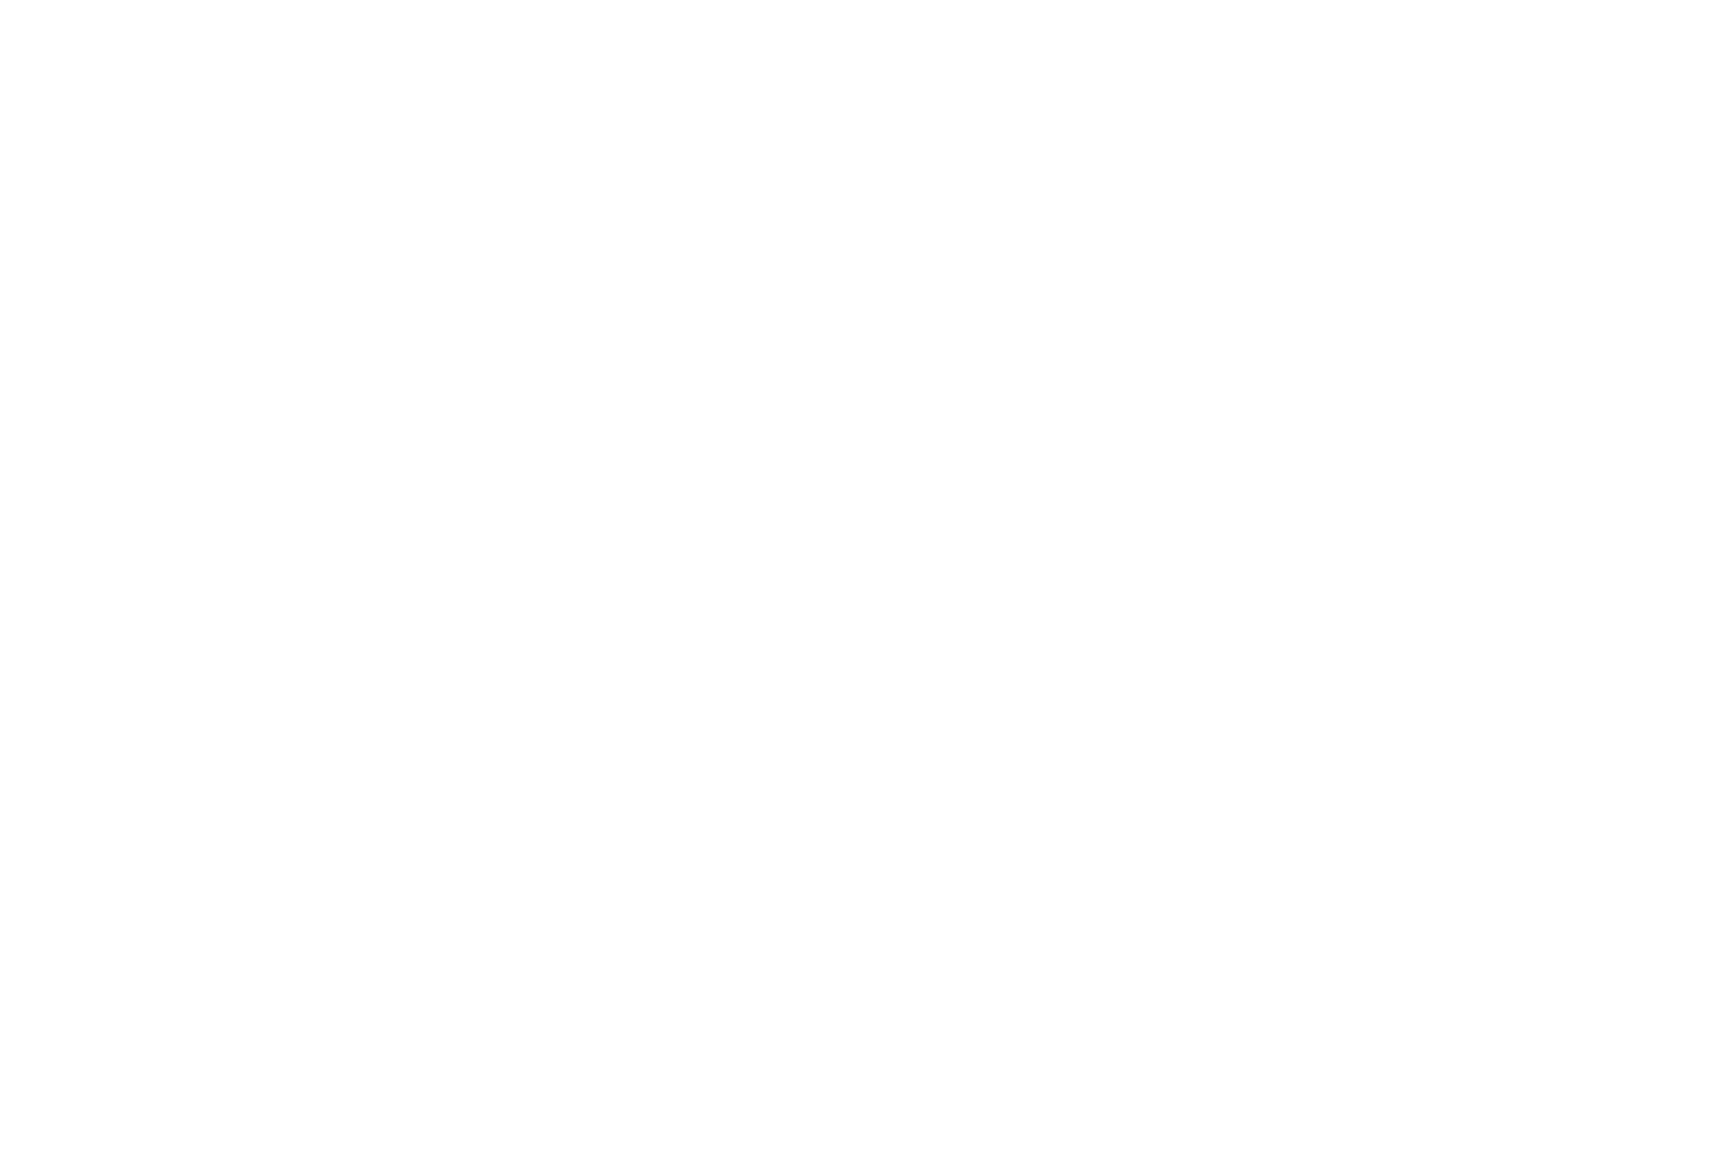 WINNER                             Best One Minute Narrative Director - Narrative Film Festival - 2021.png